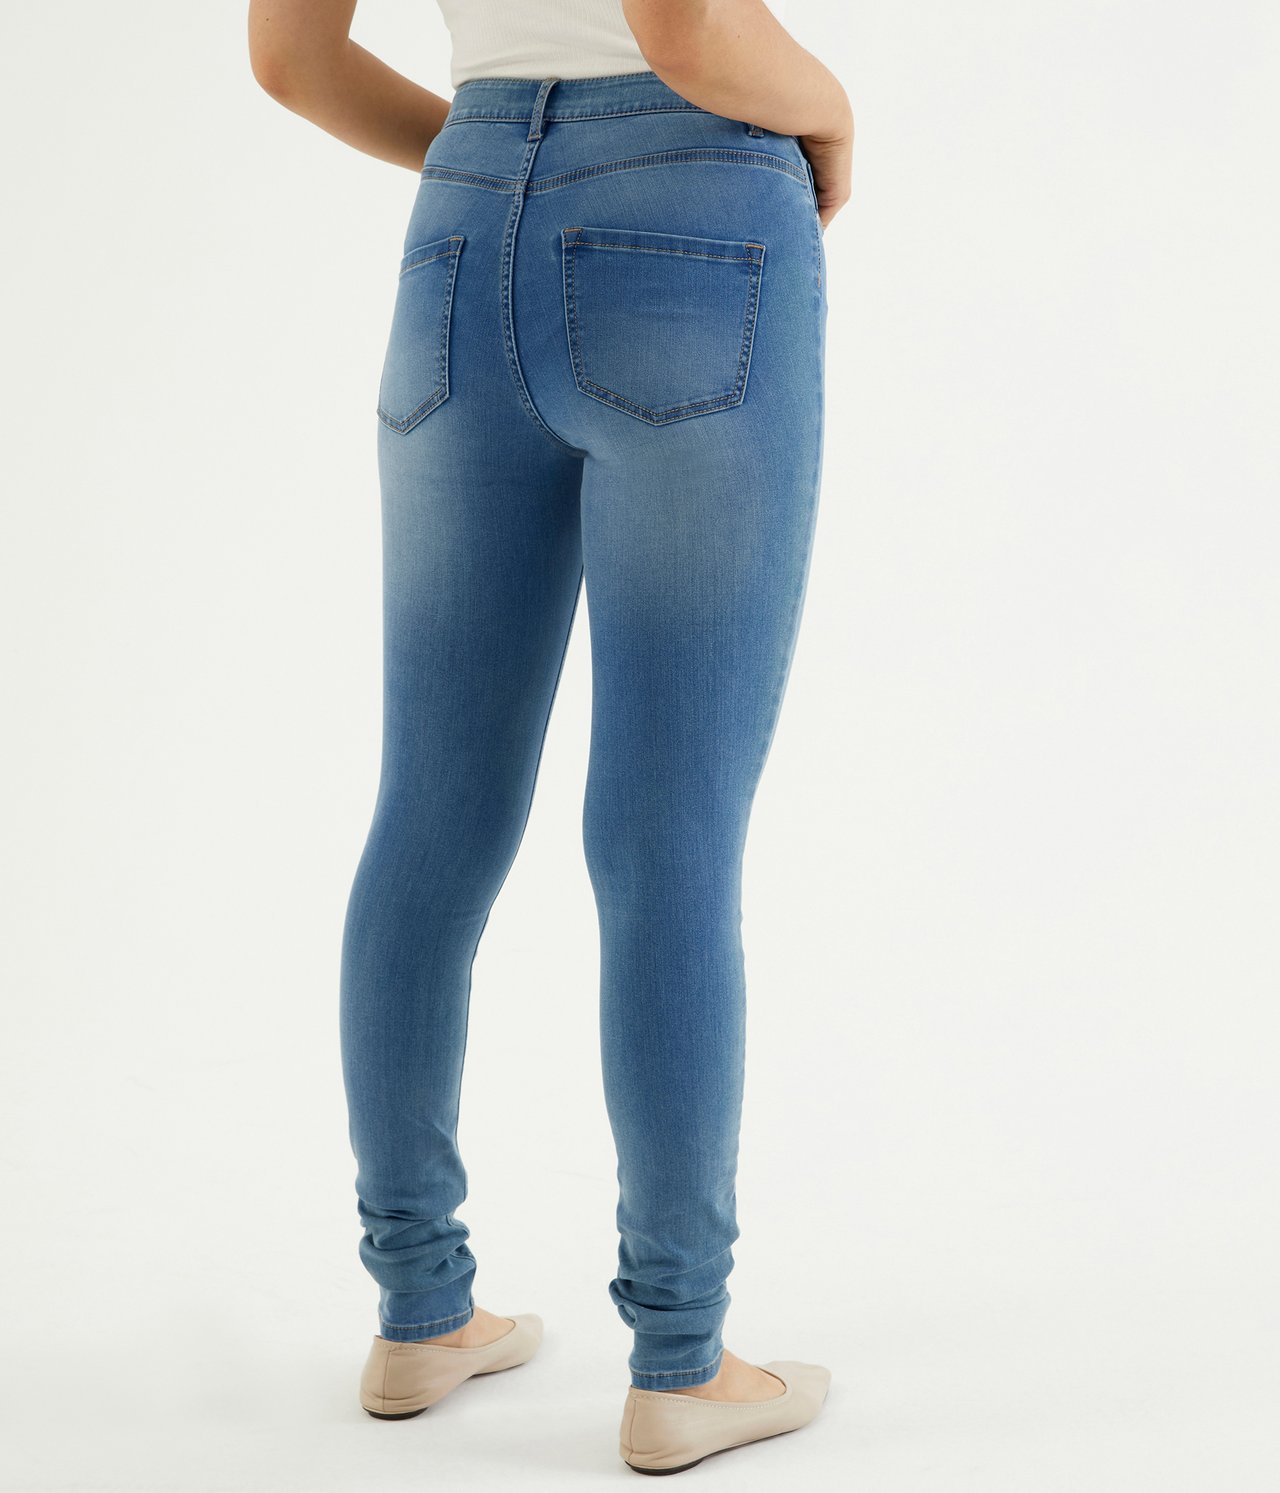 Super slim jeans extra long leg Denim - null - 3